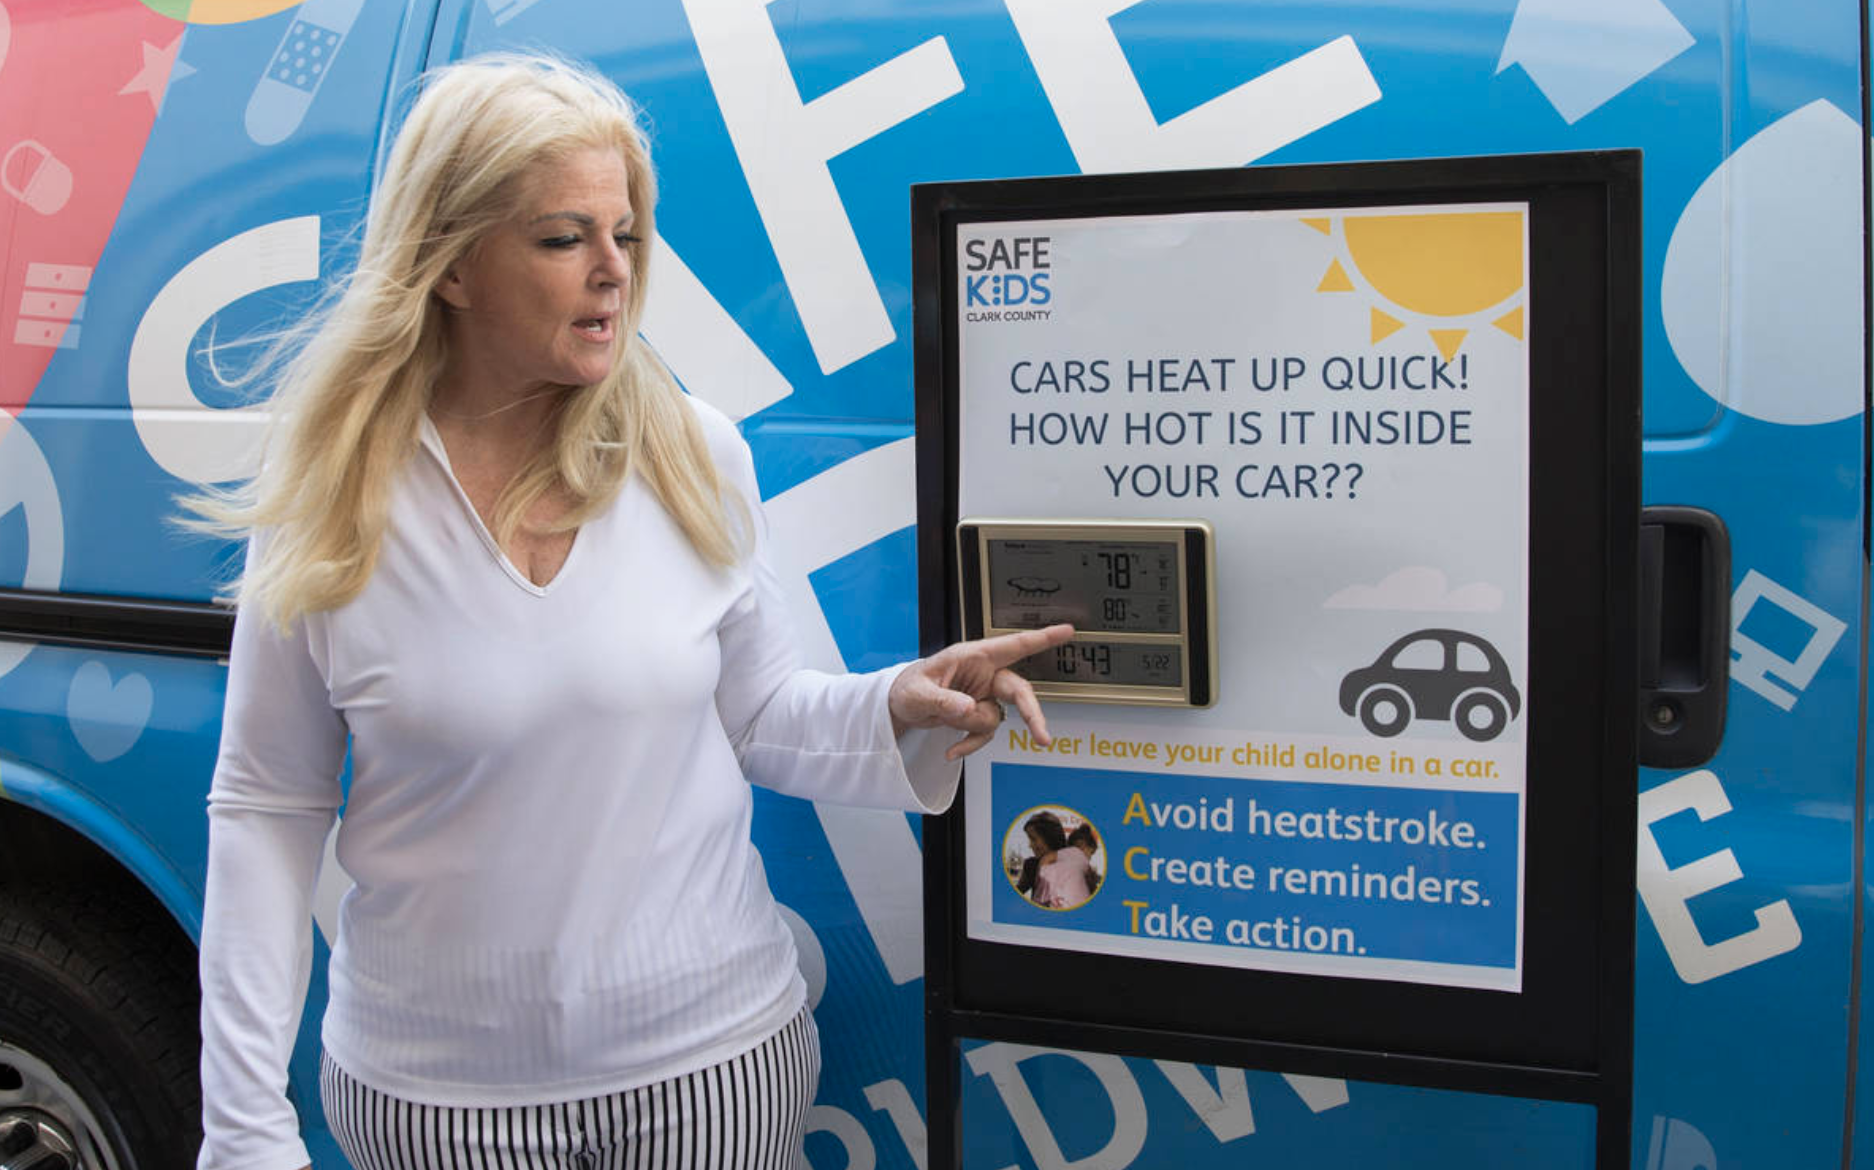 Children Can Die When Left in Hot Cars, Officials Warn